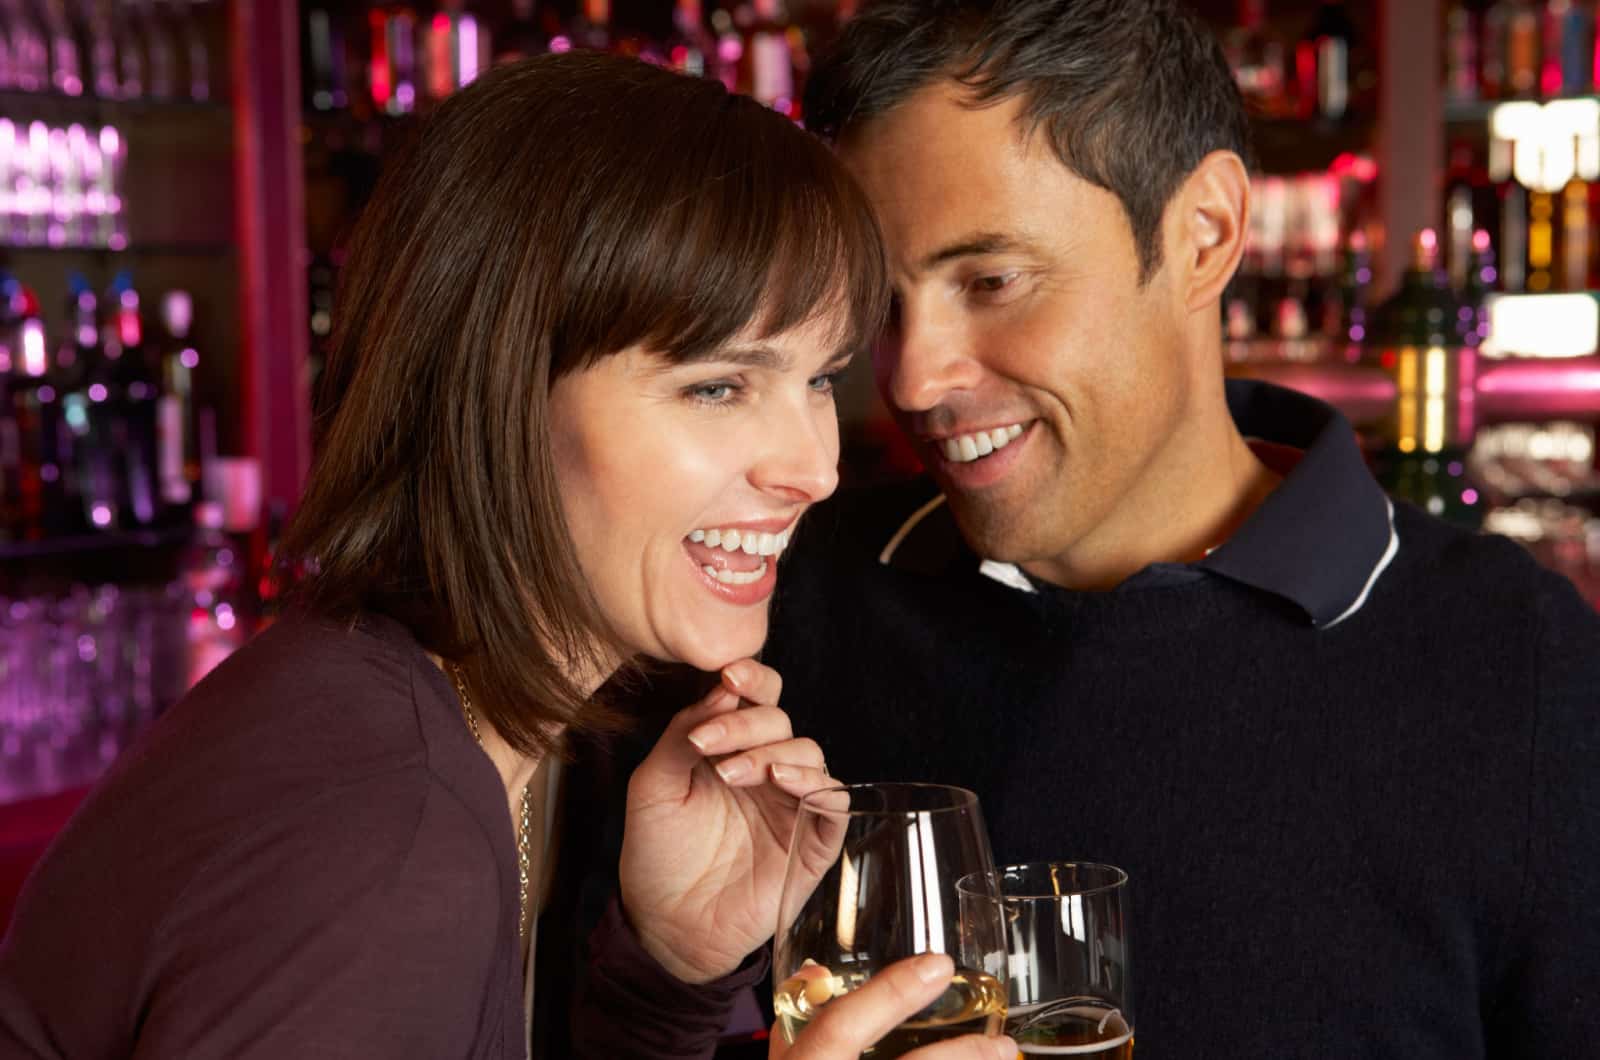 man and woman flirting in bar